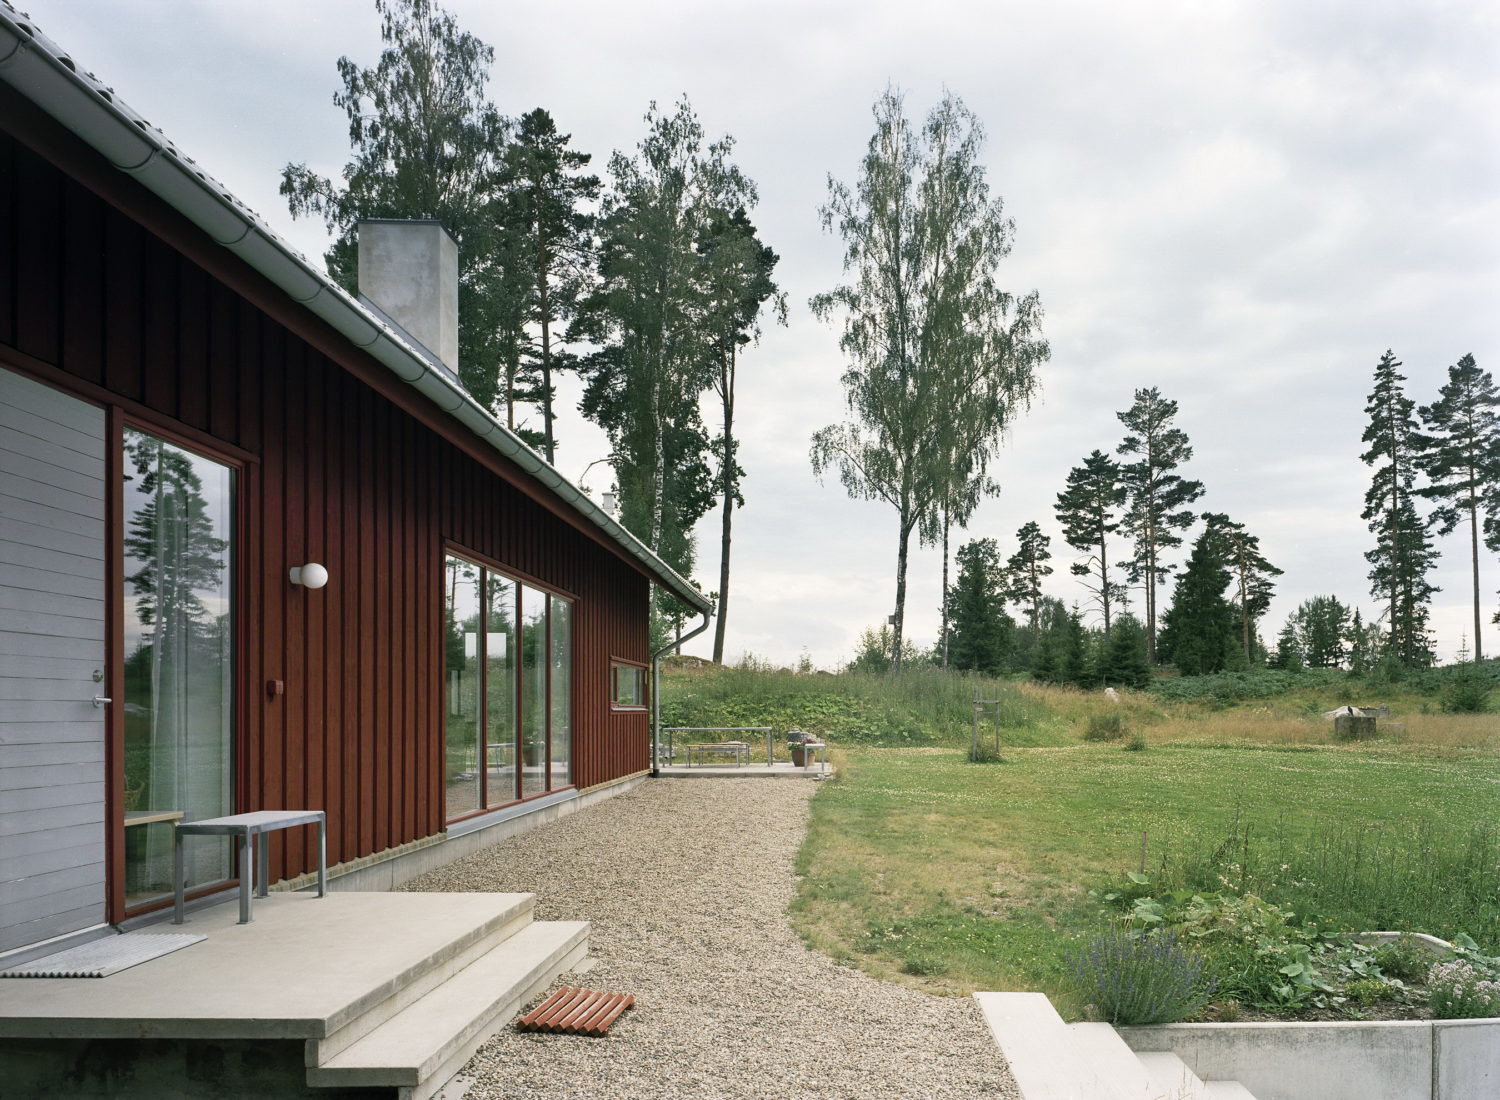 Simple House at Lake Båven by M.B.A.